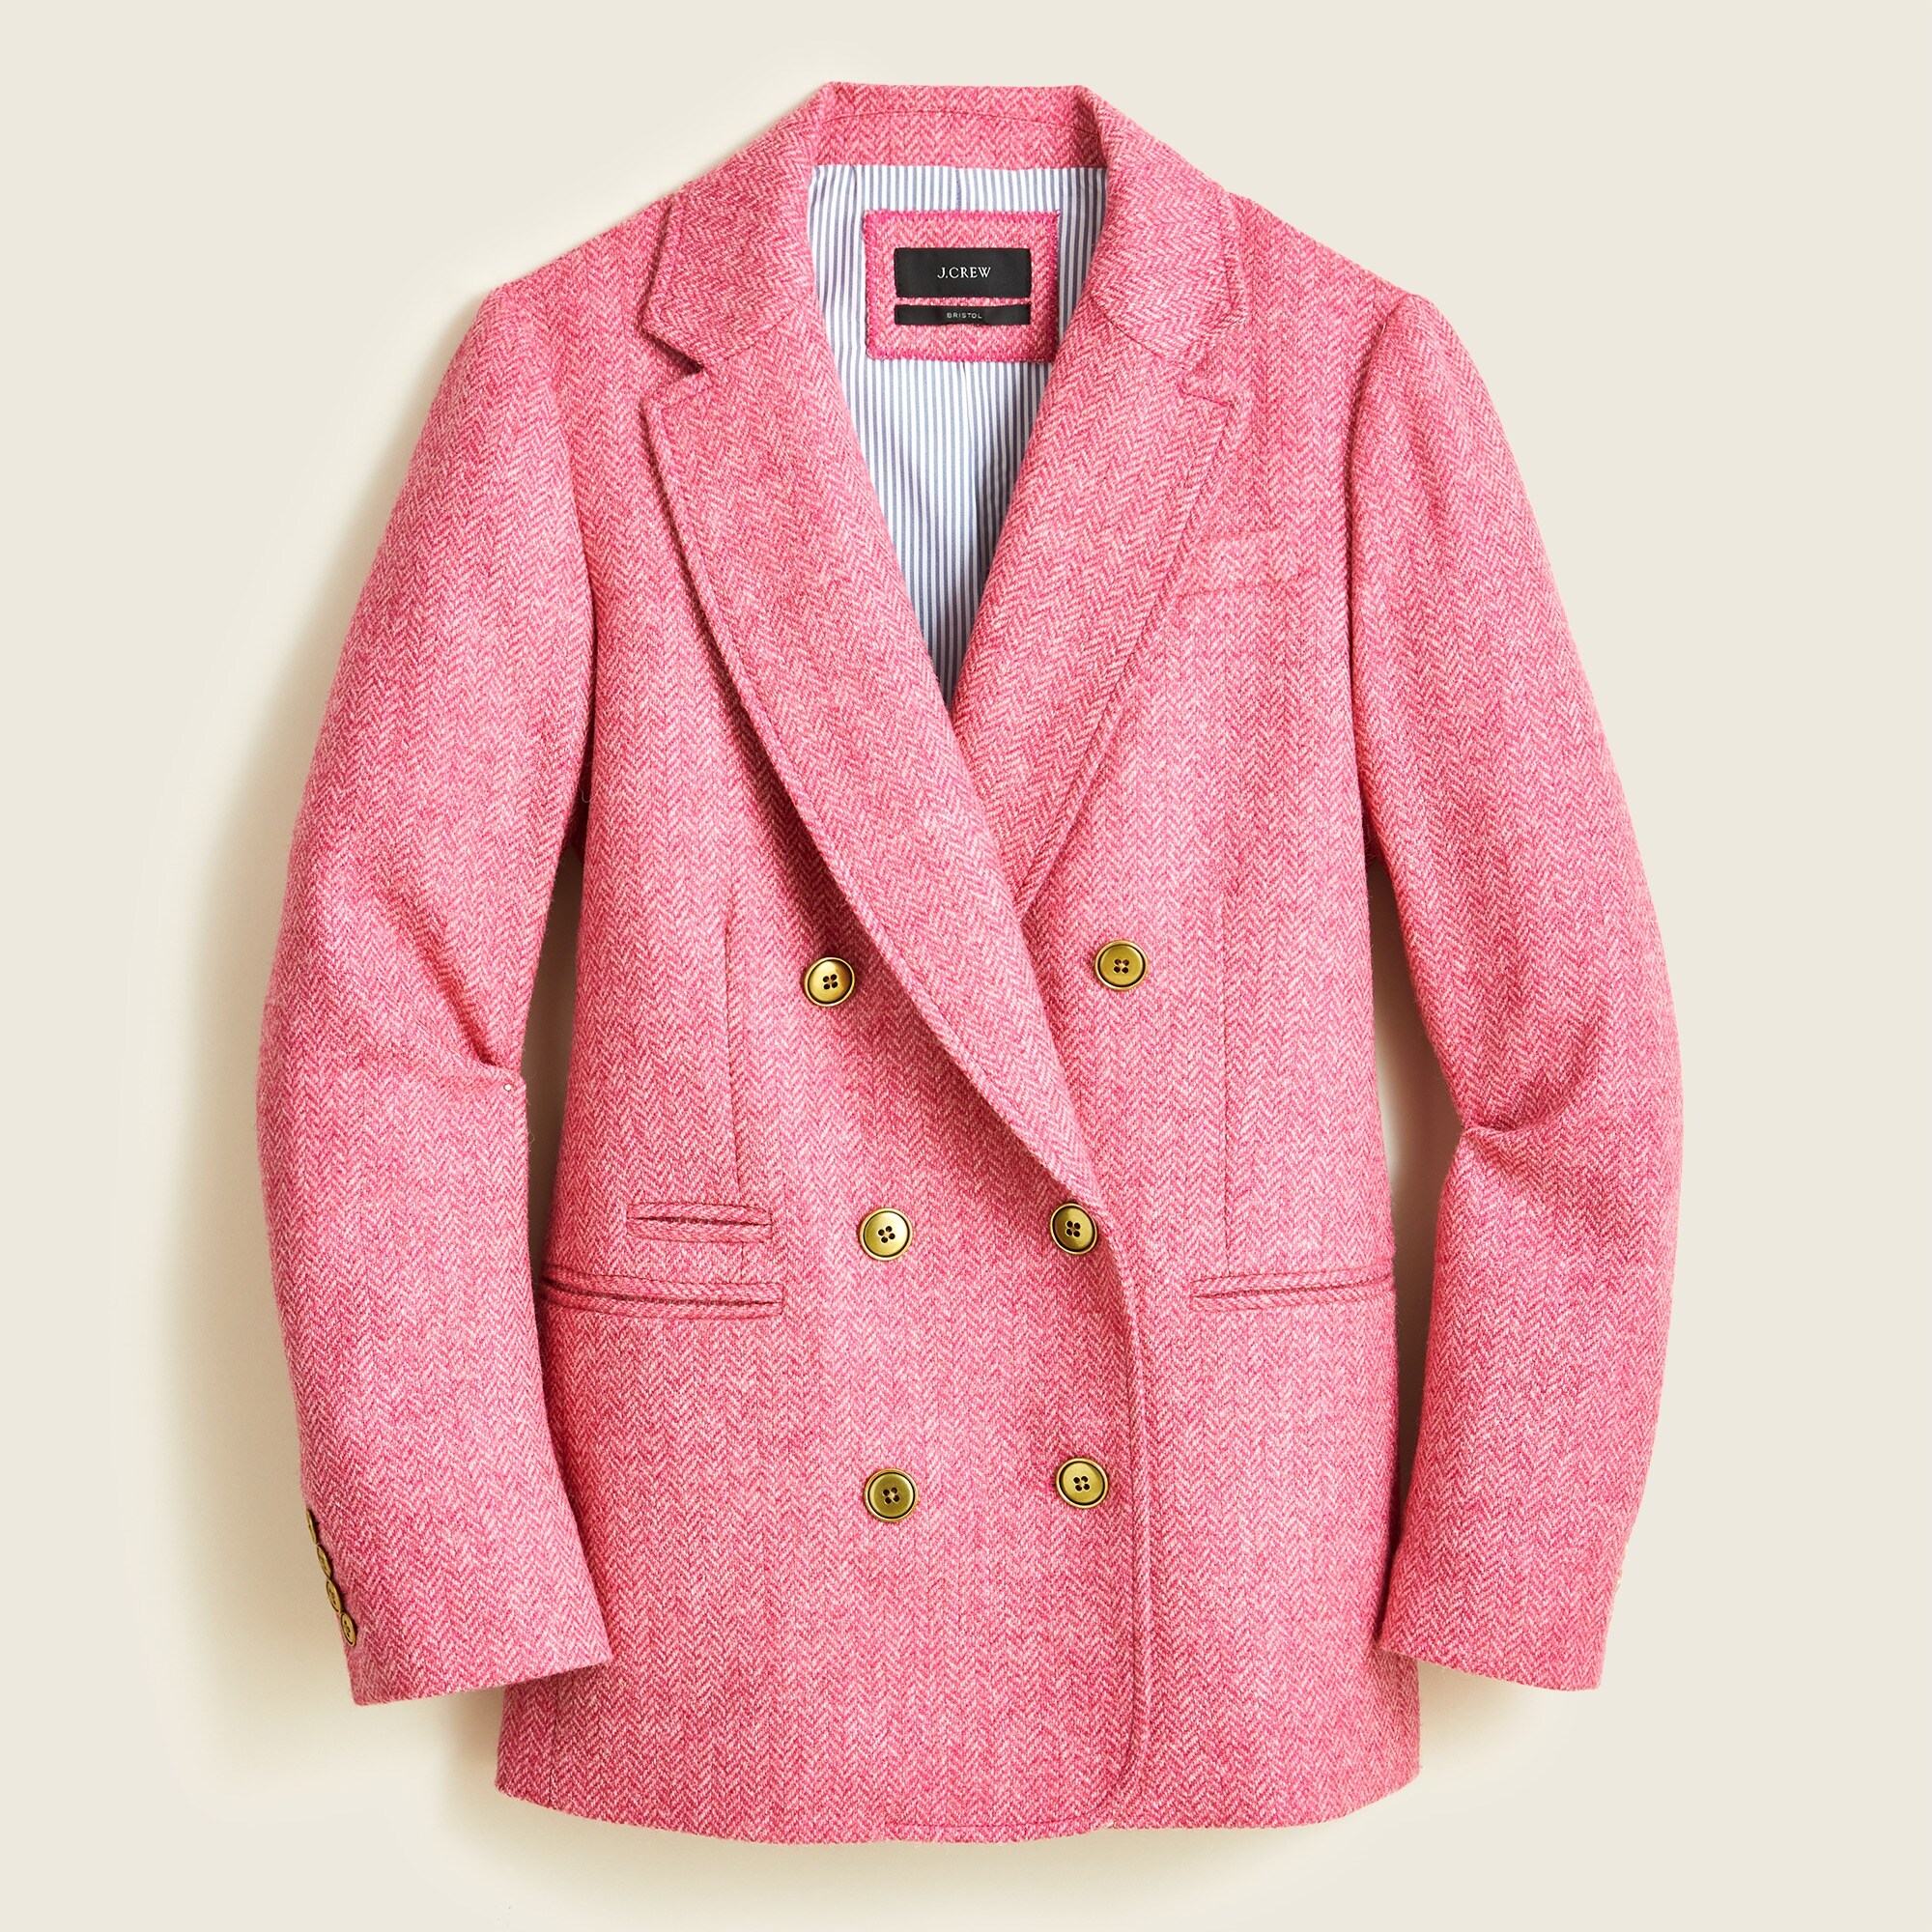  Bristol blazer in pink English wool herringbone